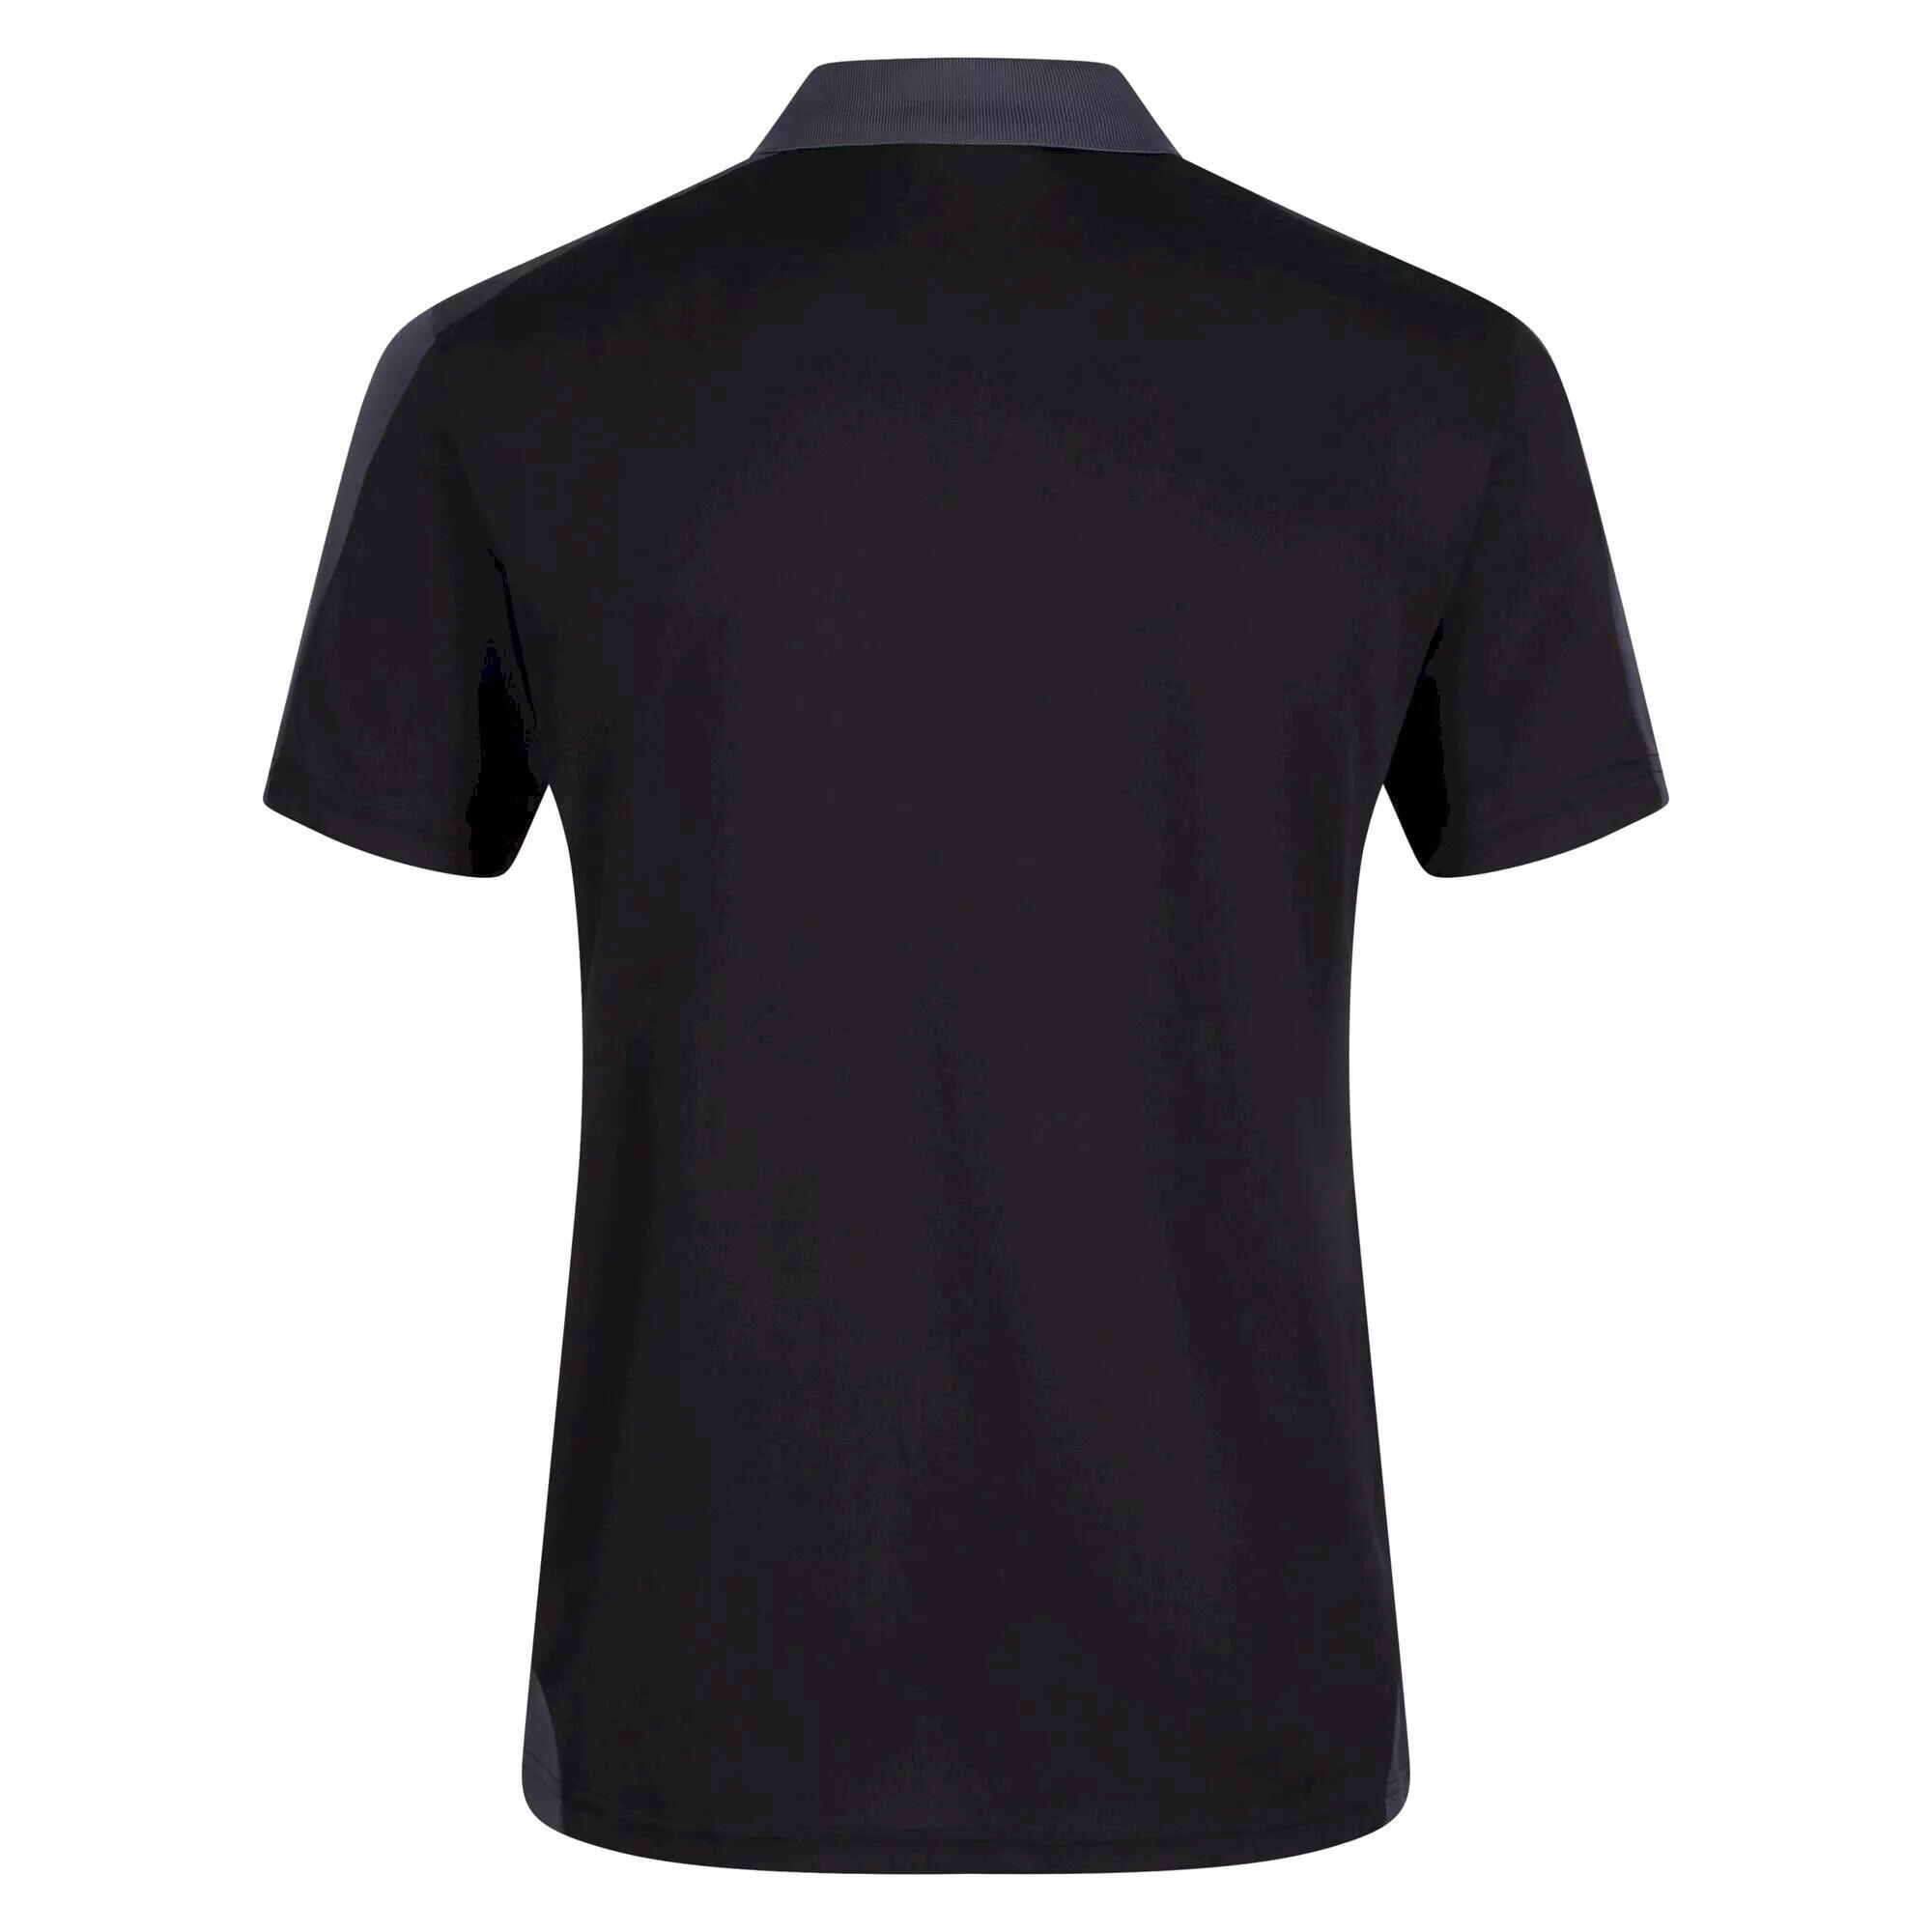 Contrast Coolweave Pique Polo Shirt (Black/Seal Grey) 2/5